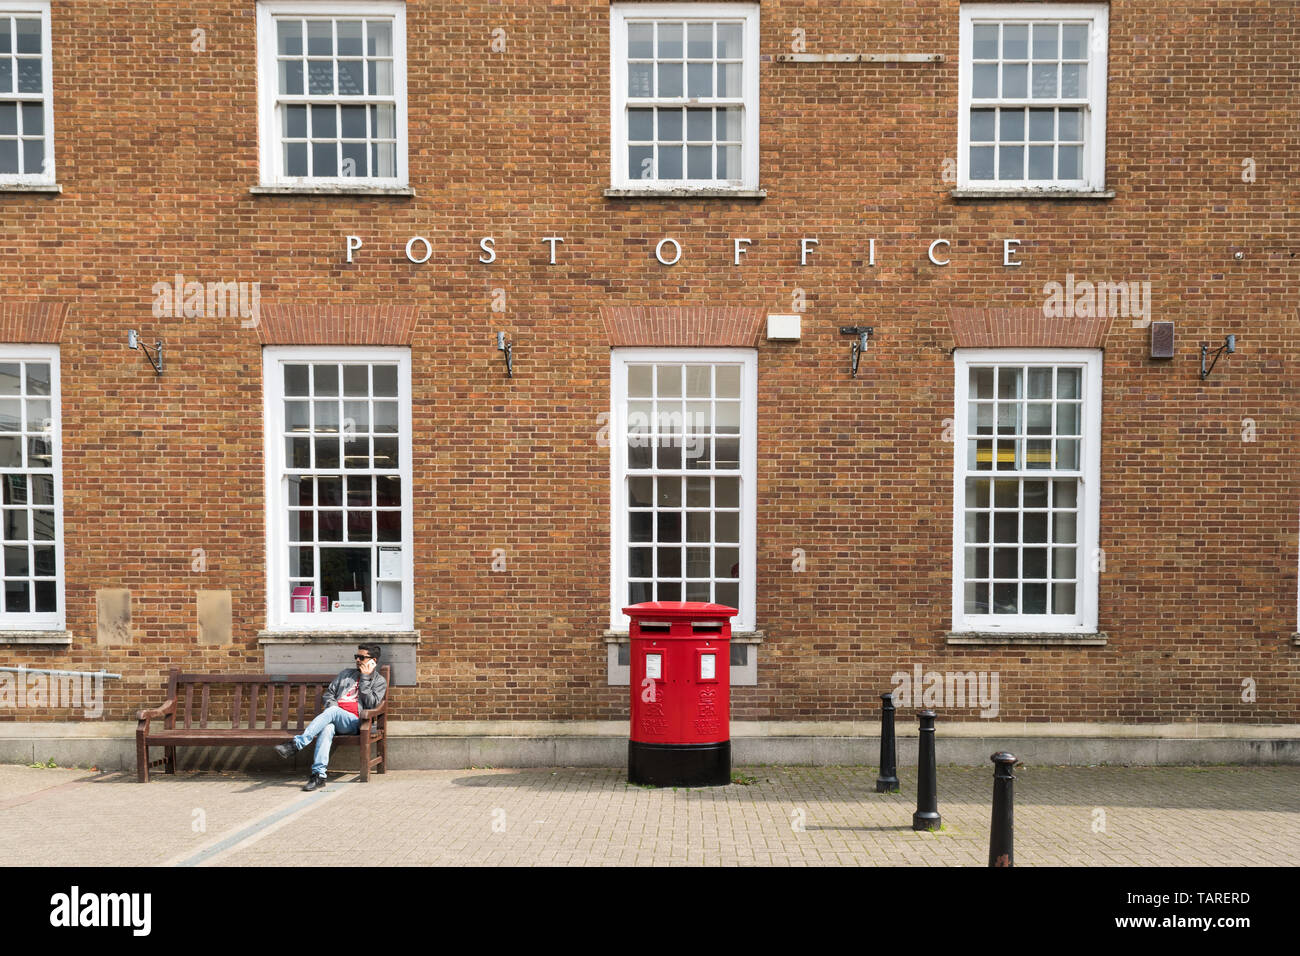 Bureau de poste, Newmarket High Street, England, UK Banque D'Images